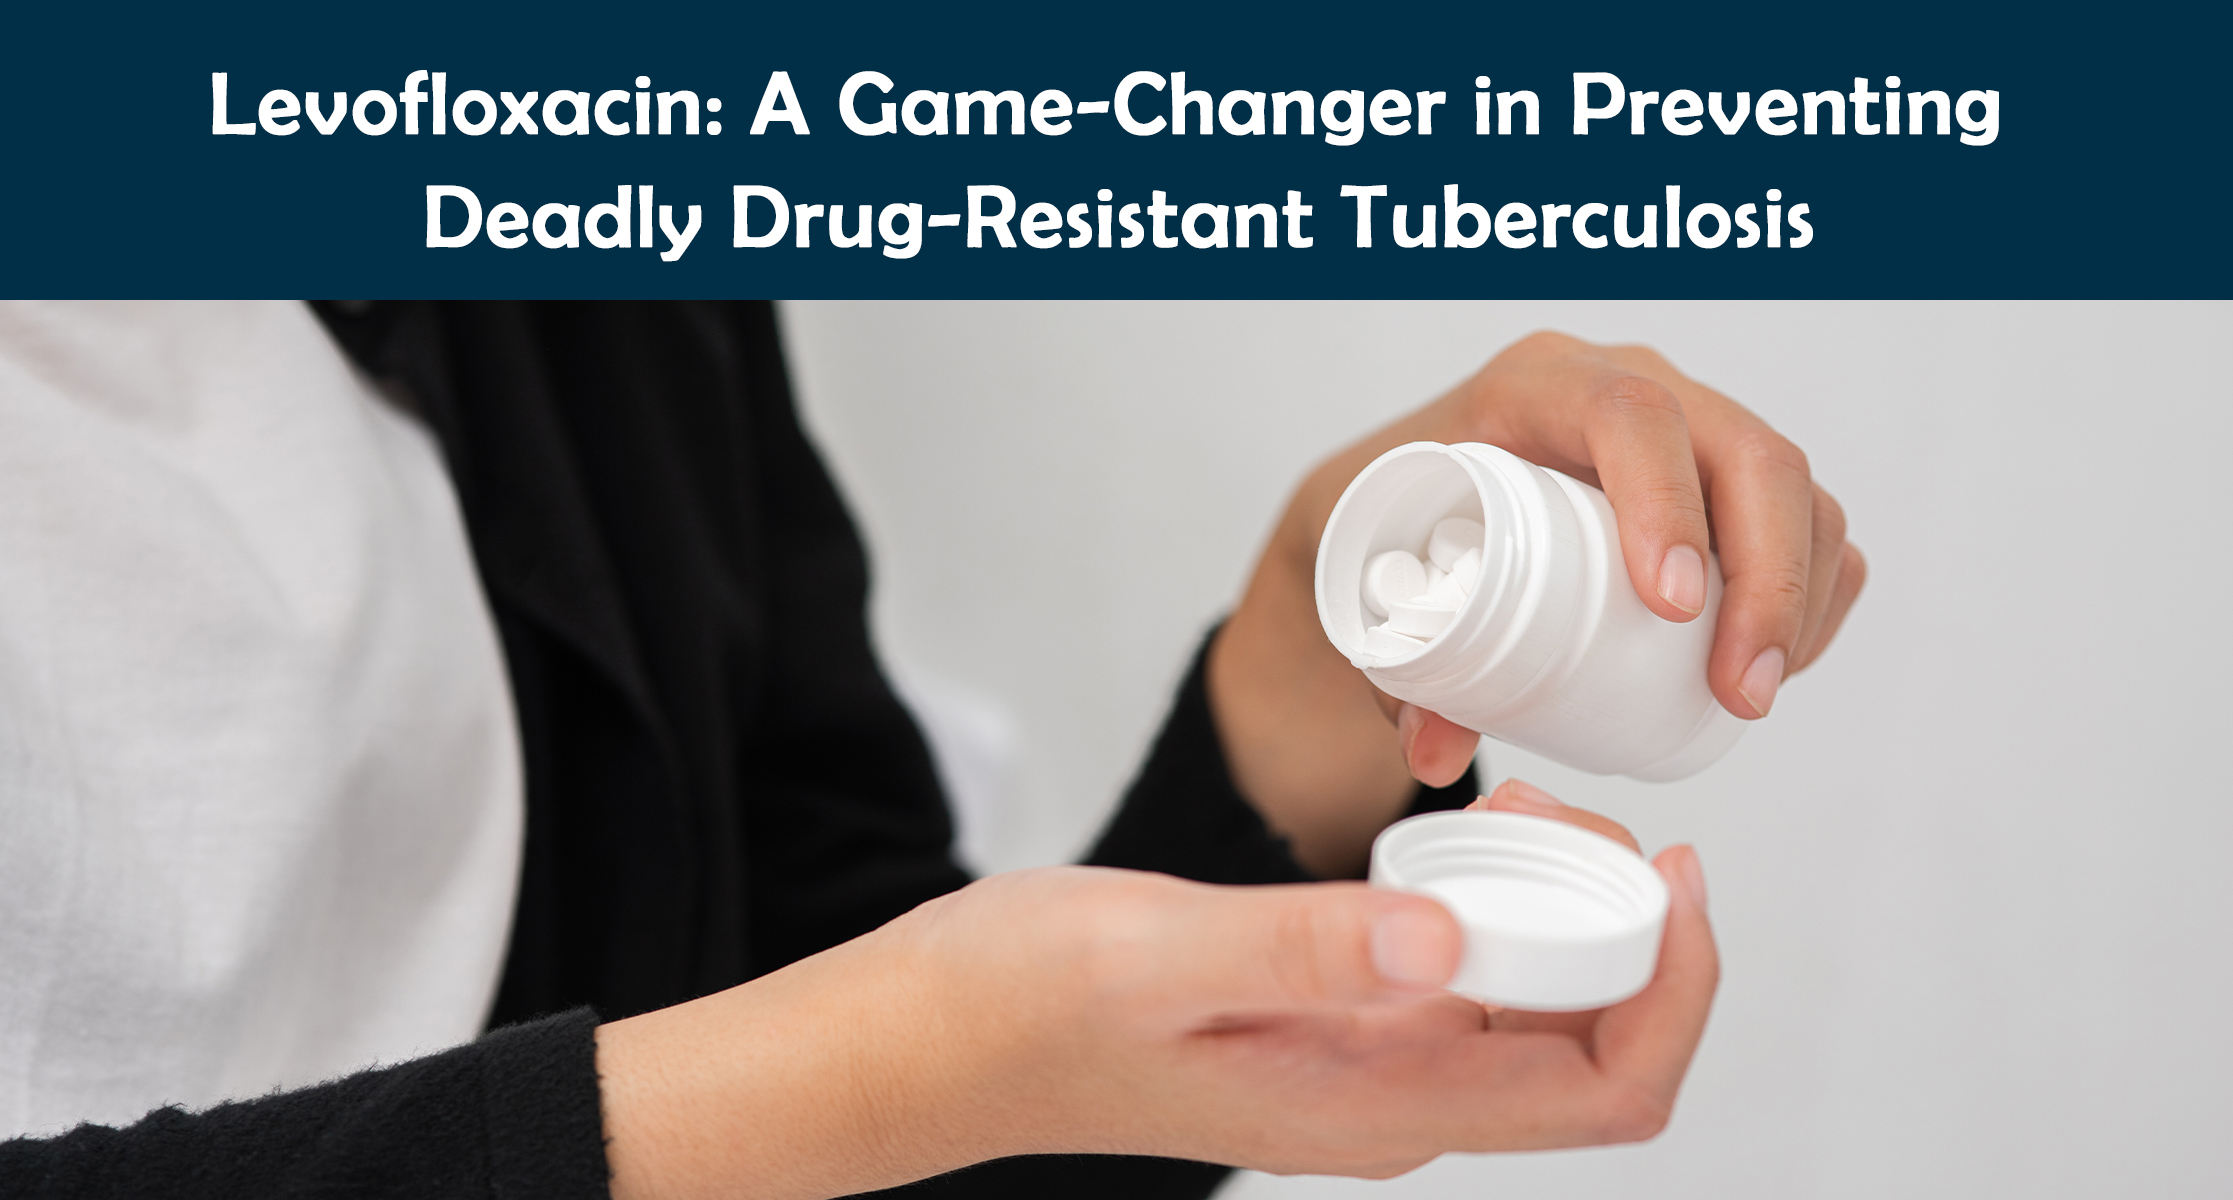 Levofloxacin: A Game-Changer in Preventing Deadly Drug-Resistant Tuberculosis